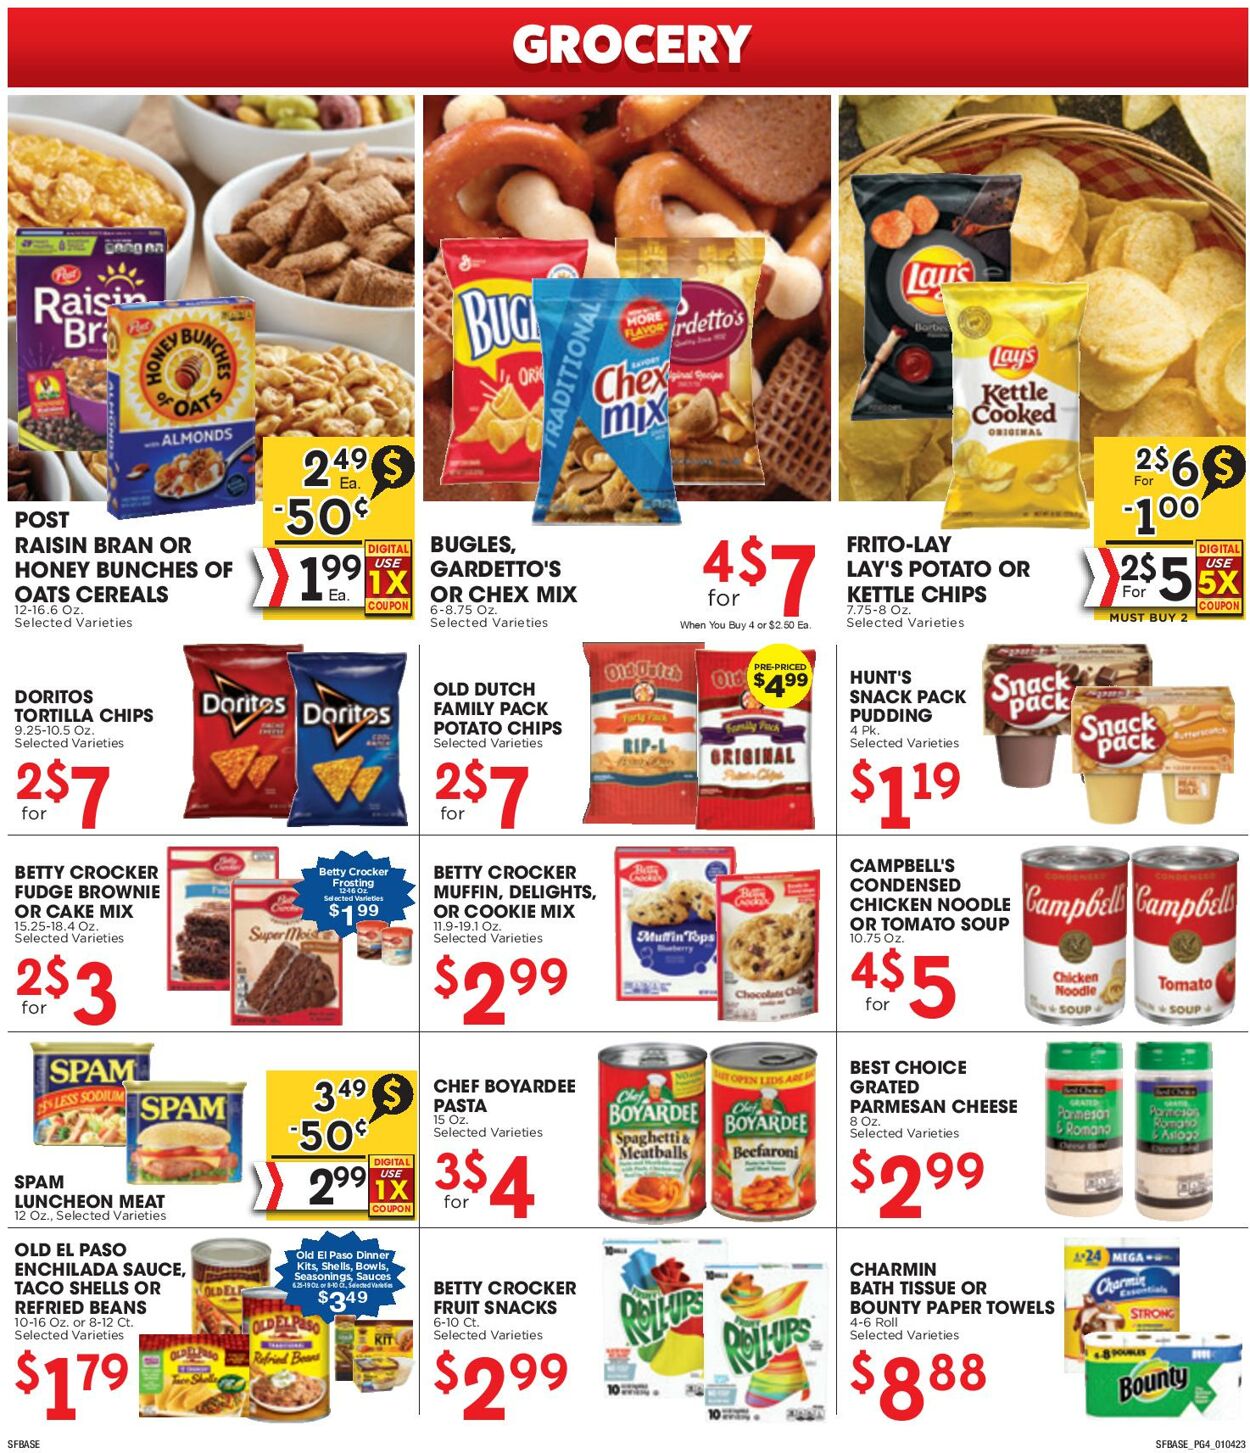 Weekly ad Sunshine Foods 01/04/2023 - 01/10/2023